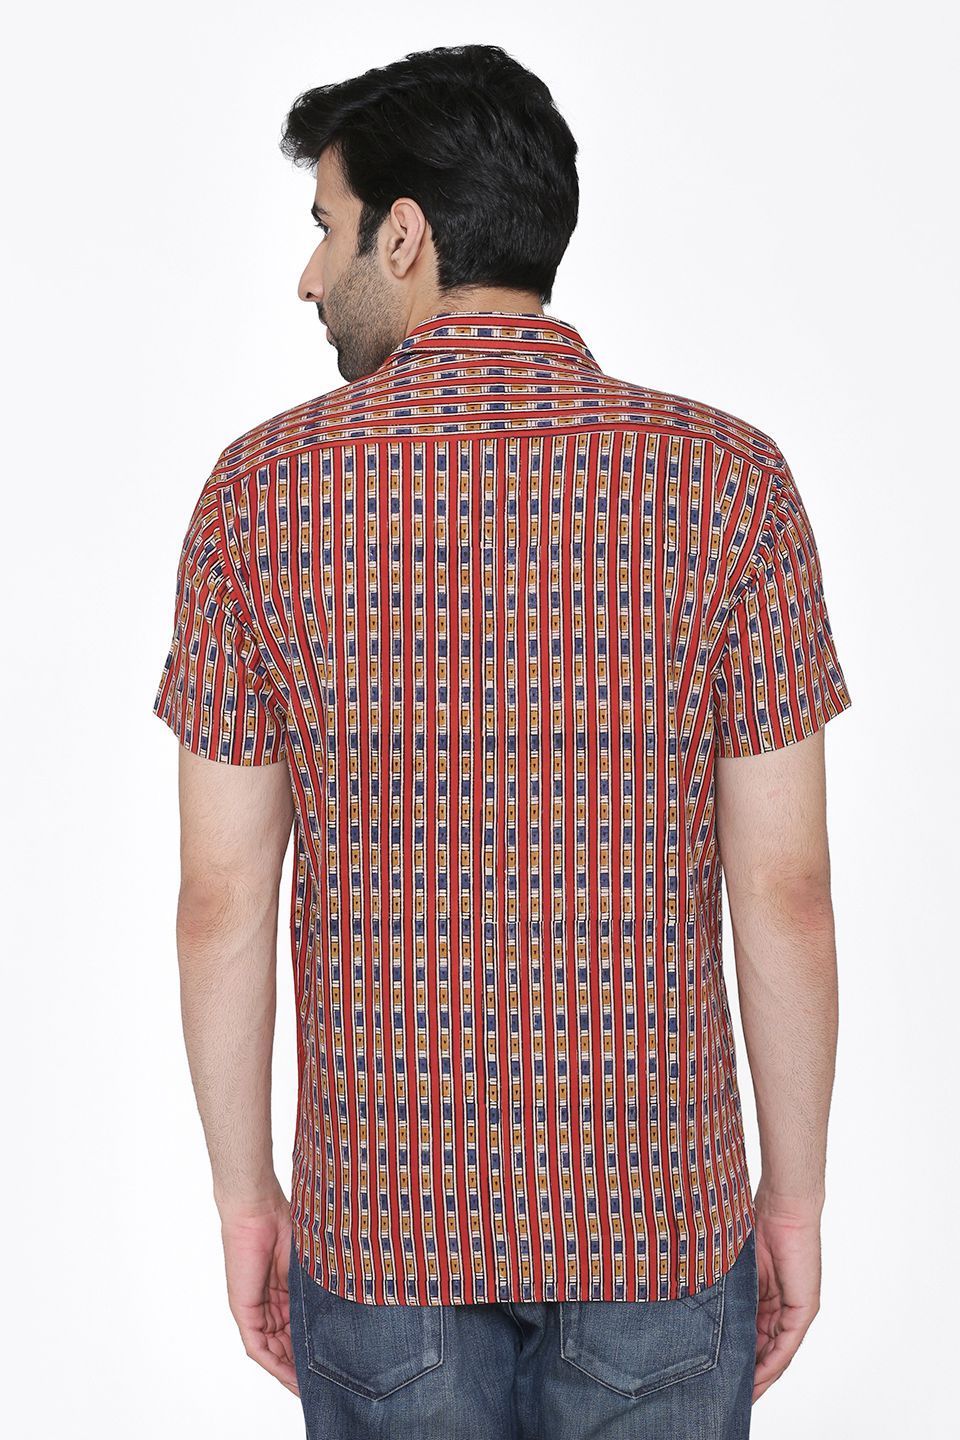 Jaipur 100%  Cotton multicolored Shirt